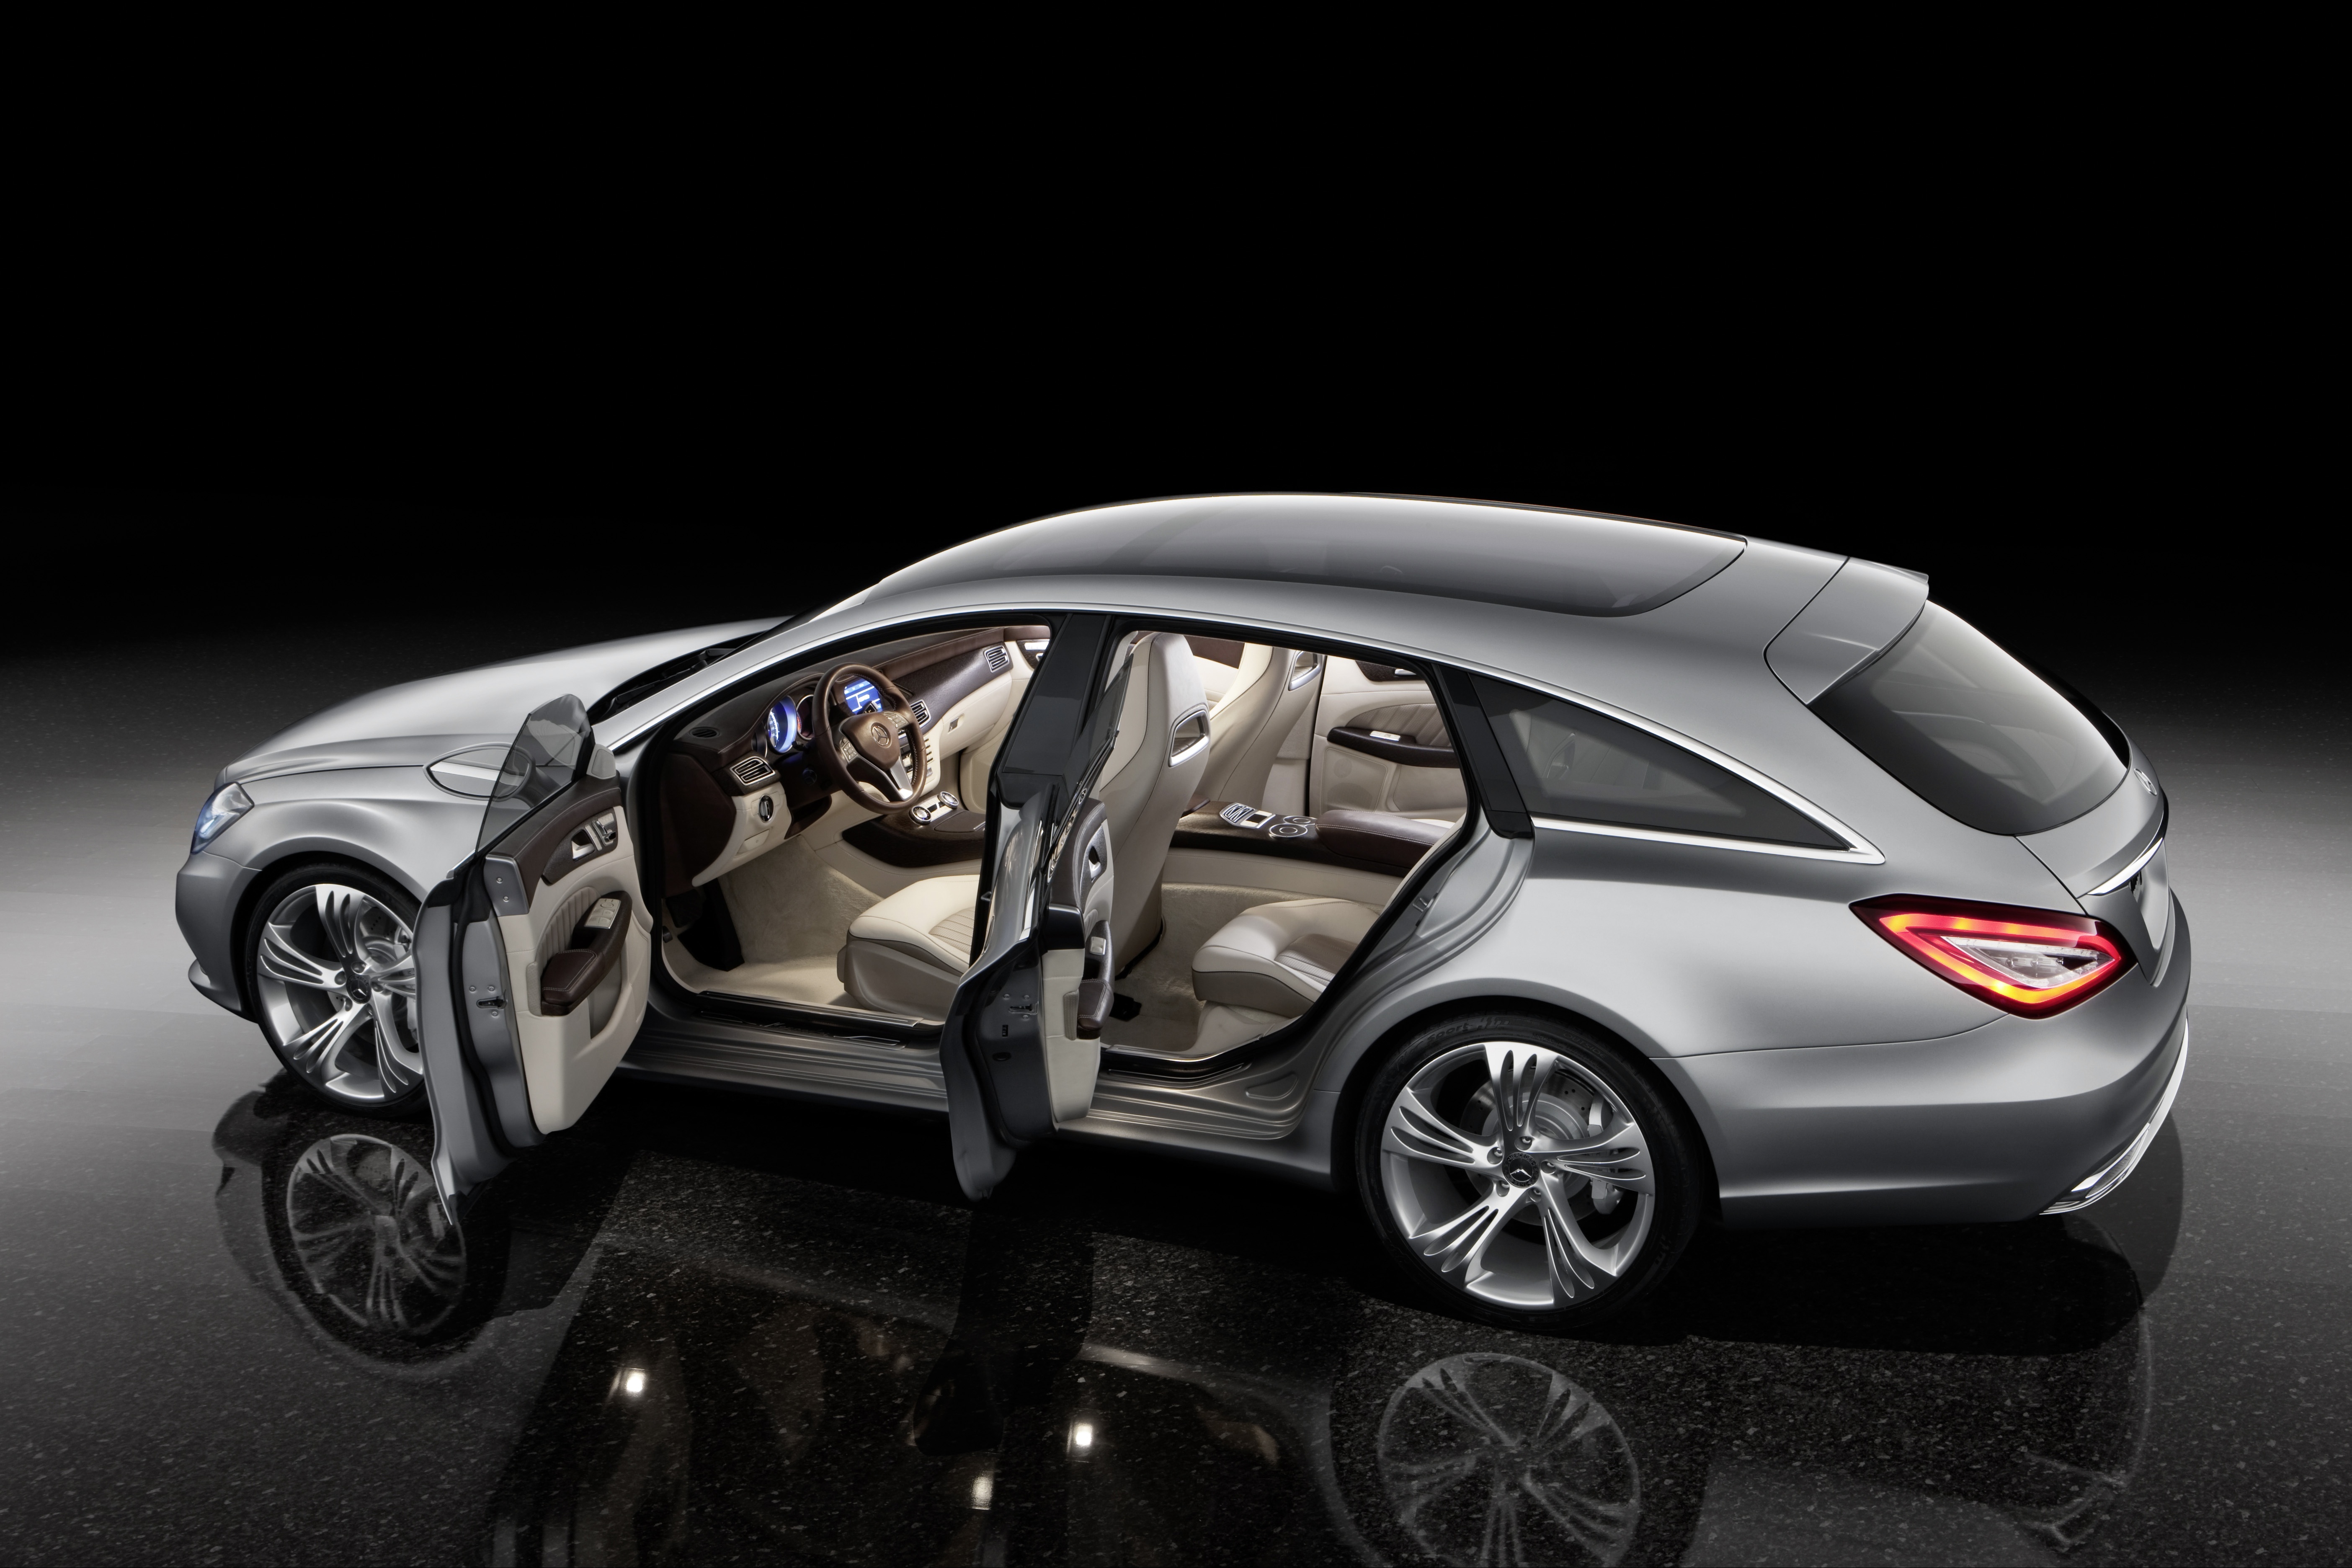 Mercedes Shooting Break Concept Car Doors open - | EuroCar News